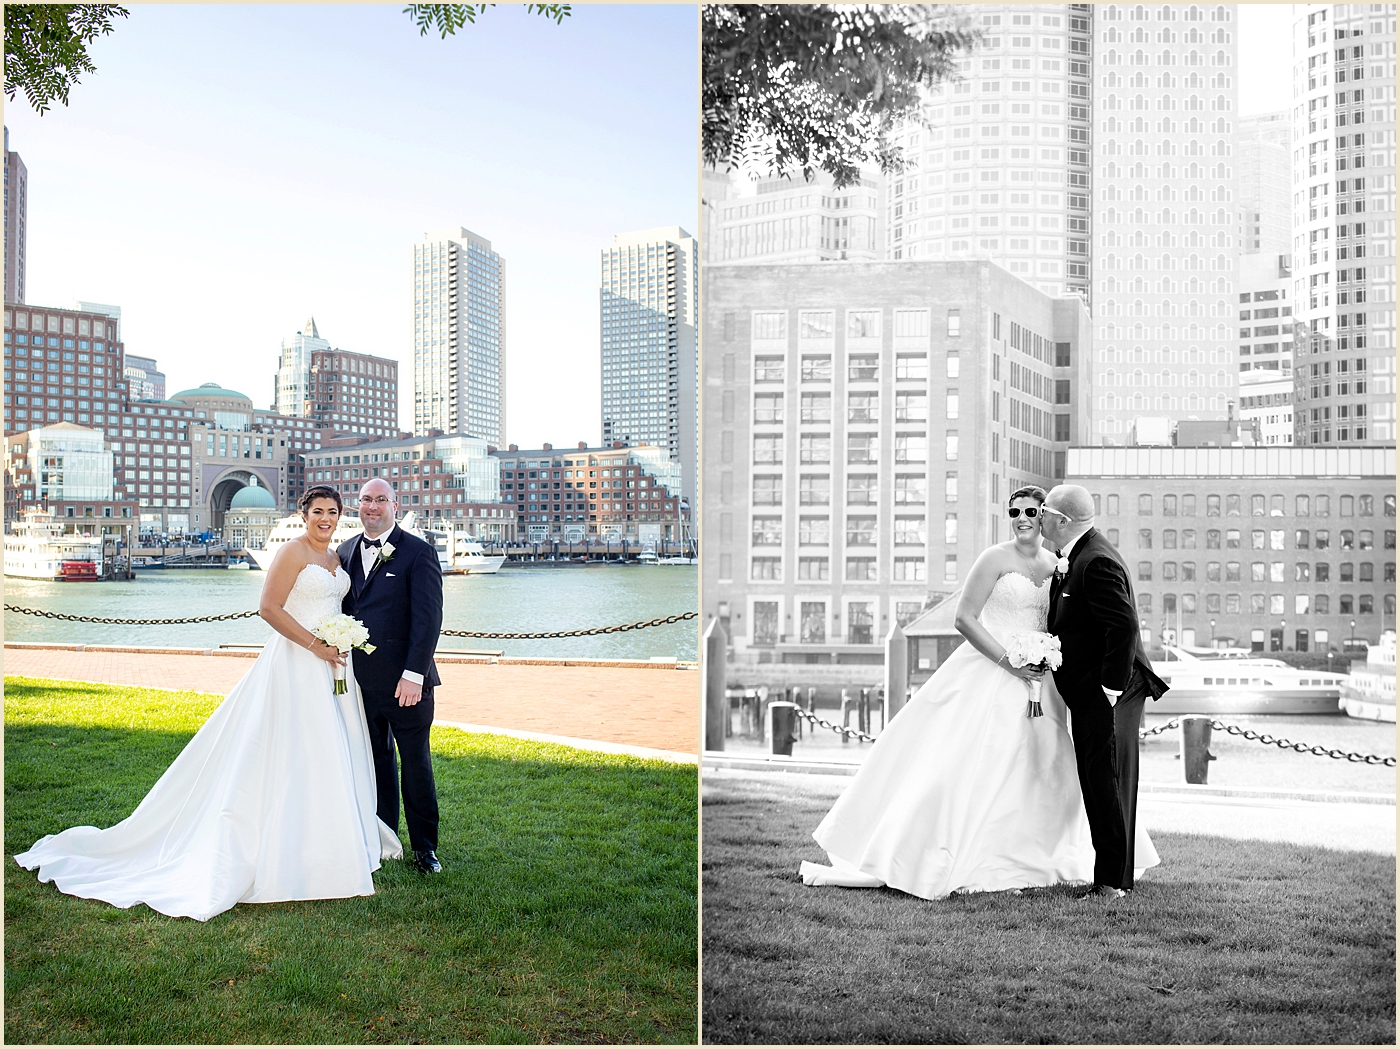 Boston Seaport Wedding Photography 